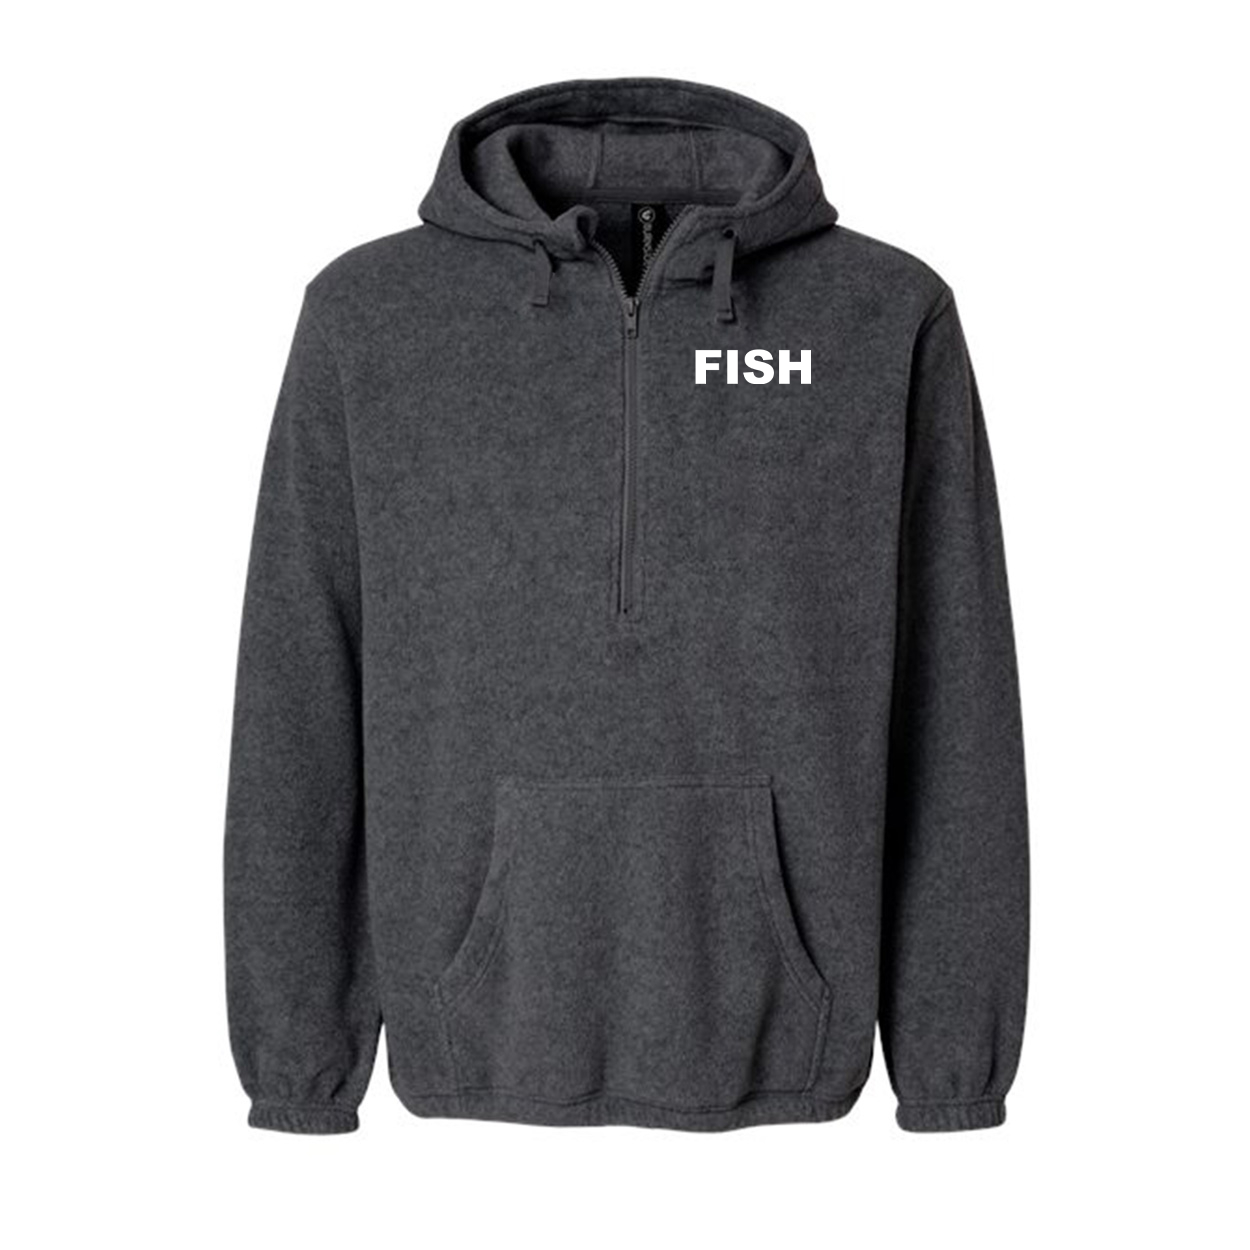 Fish Brand Logo Night Out Quarter Zip Fleece Sweatshirt Sweatshirt Heather Charcoal (White Logo)